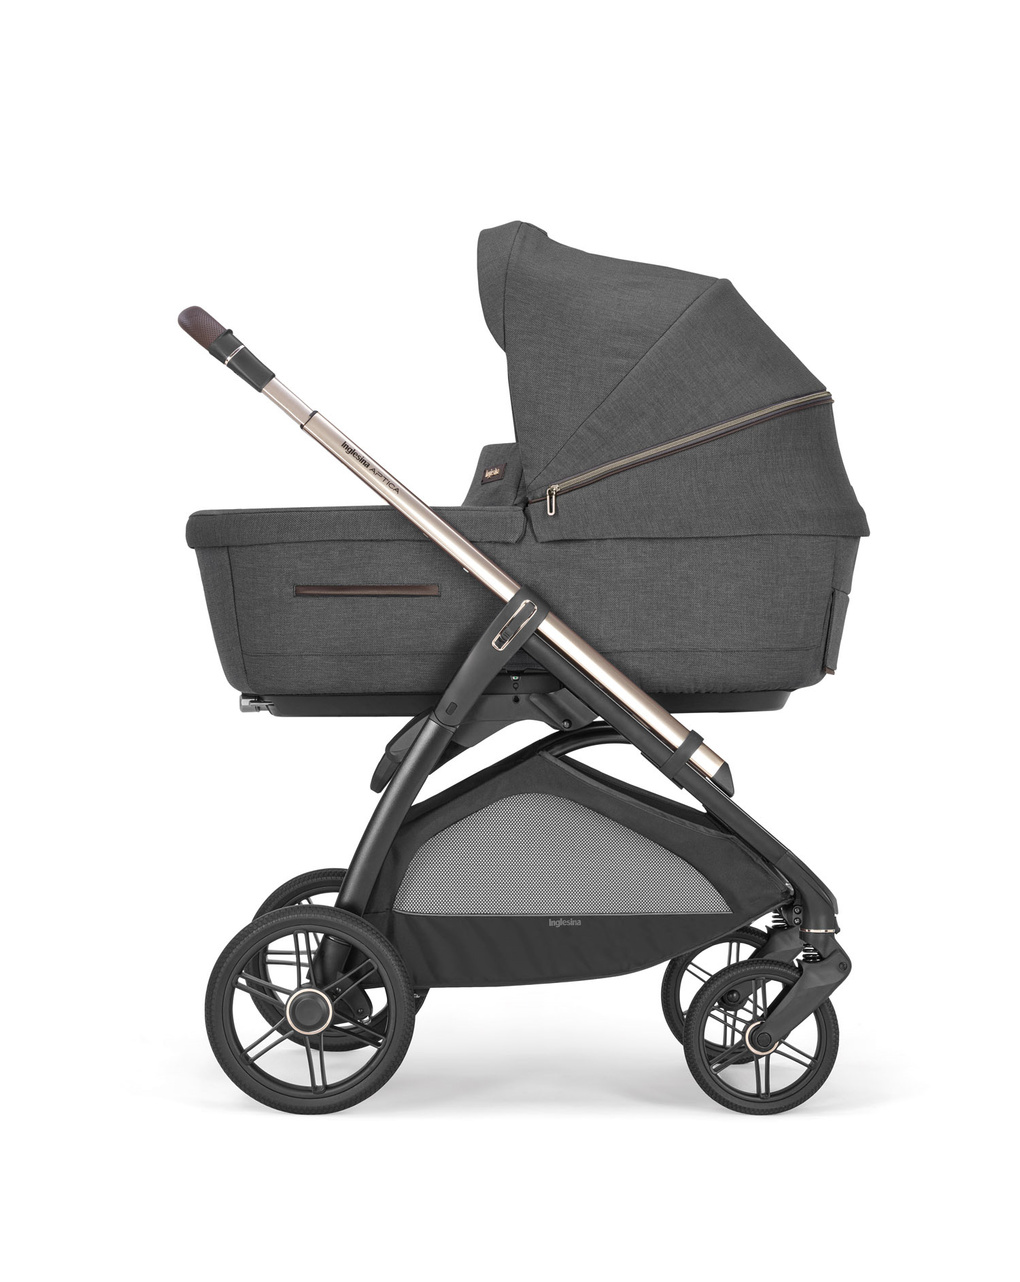 Inglesina aptica system quattro darwin infant recline σχέδιο velvet grey με σκελετό palladio black - Inglesina